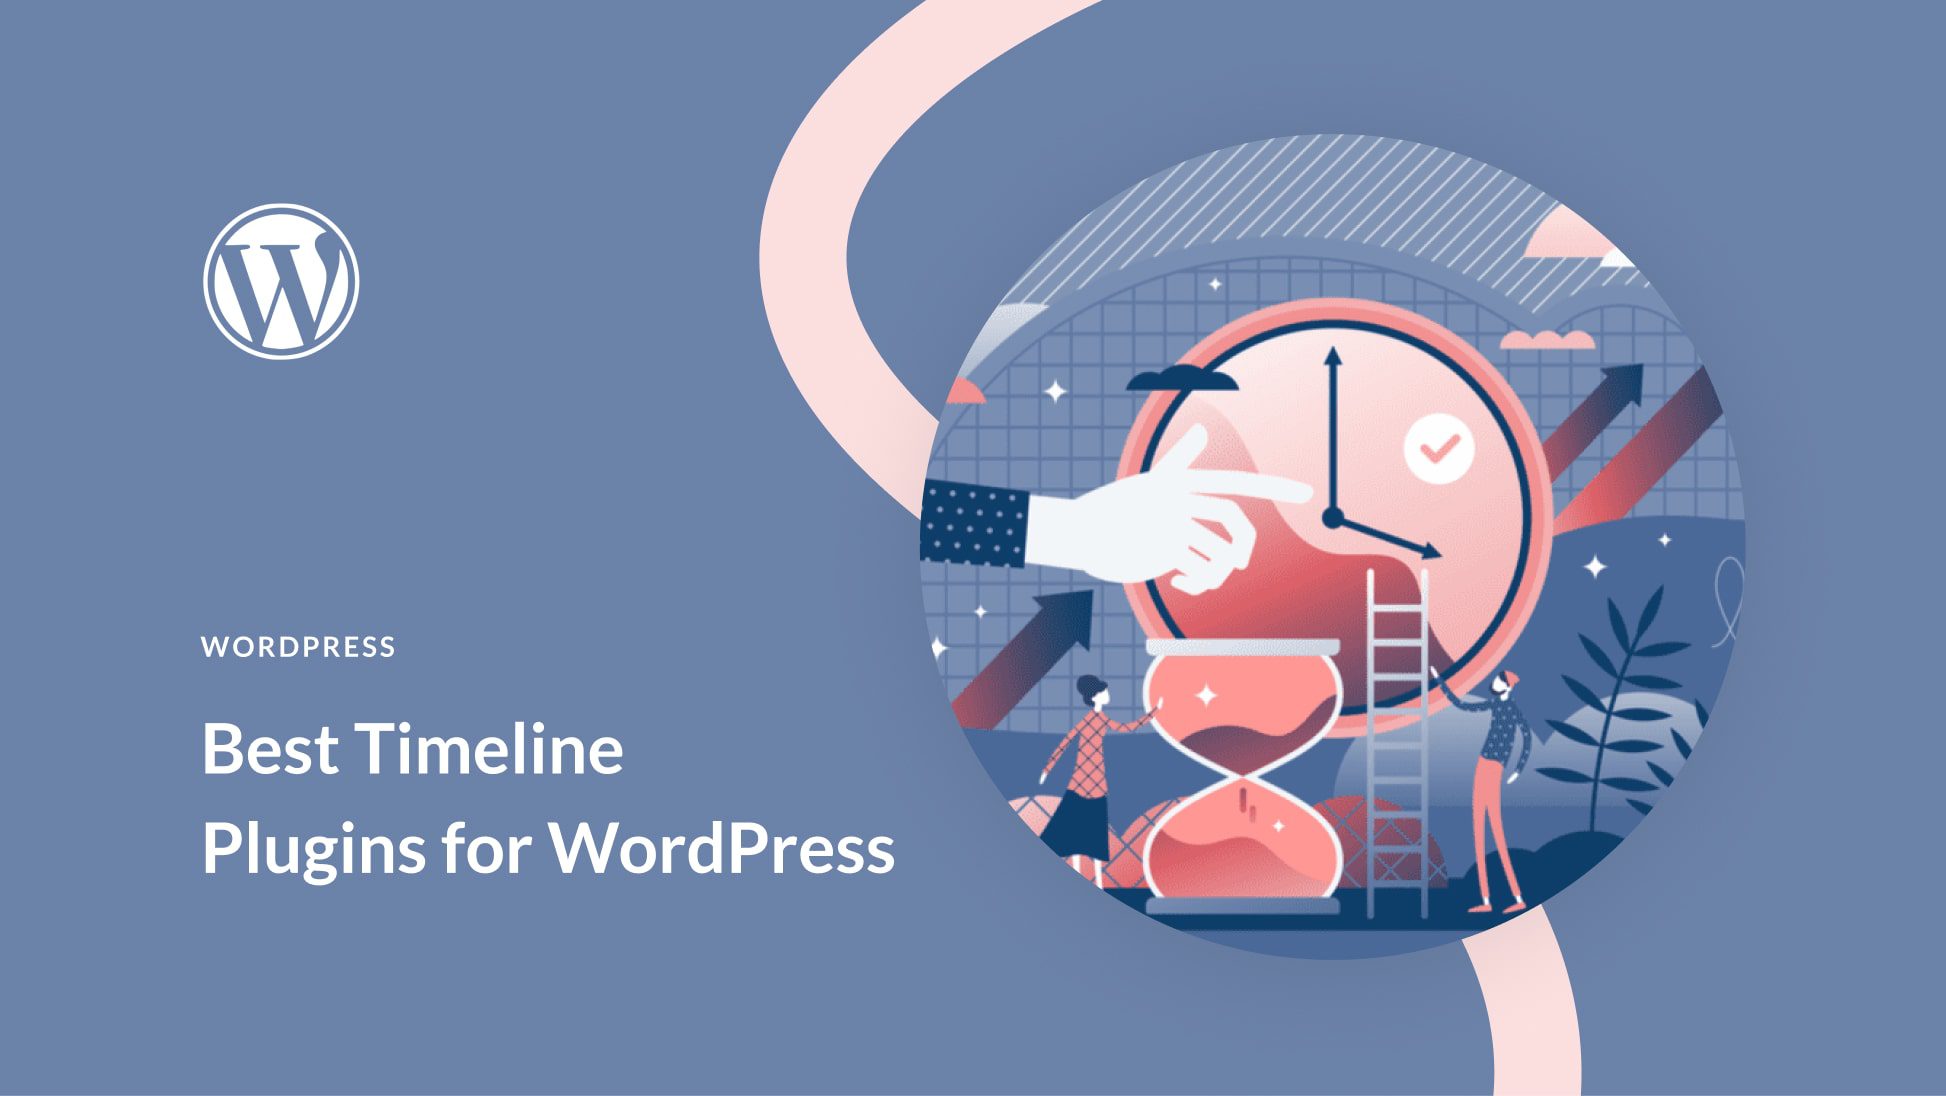 Wordpress Best Timeline Plugins 